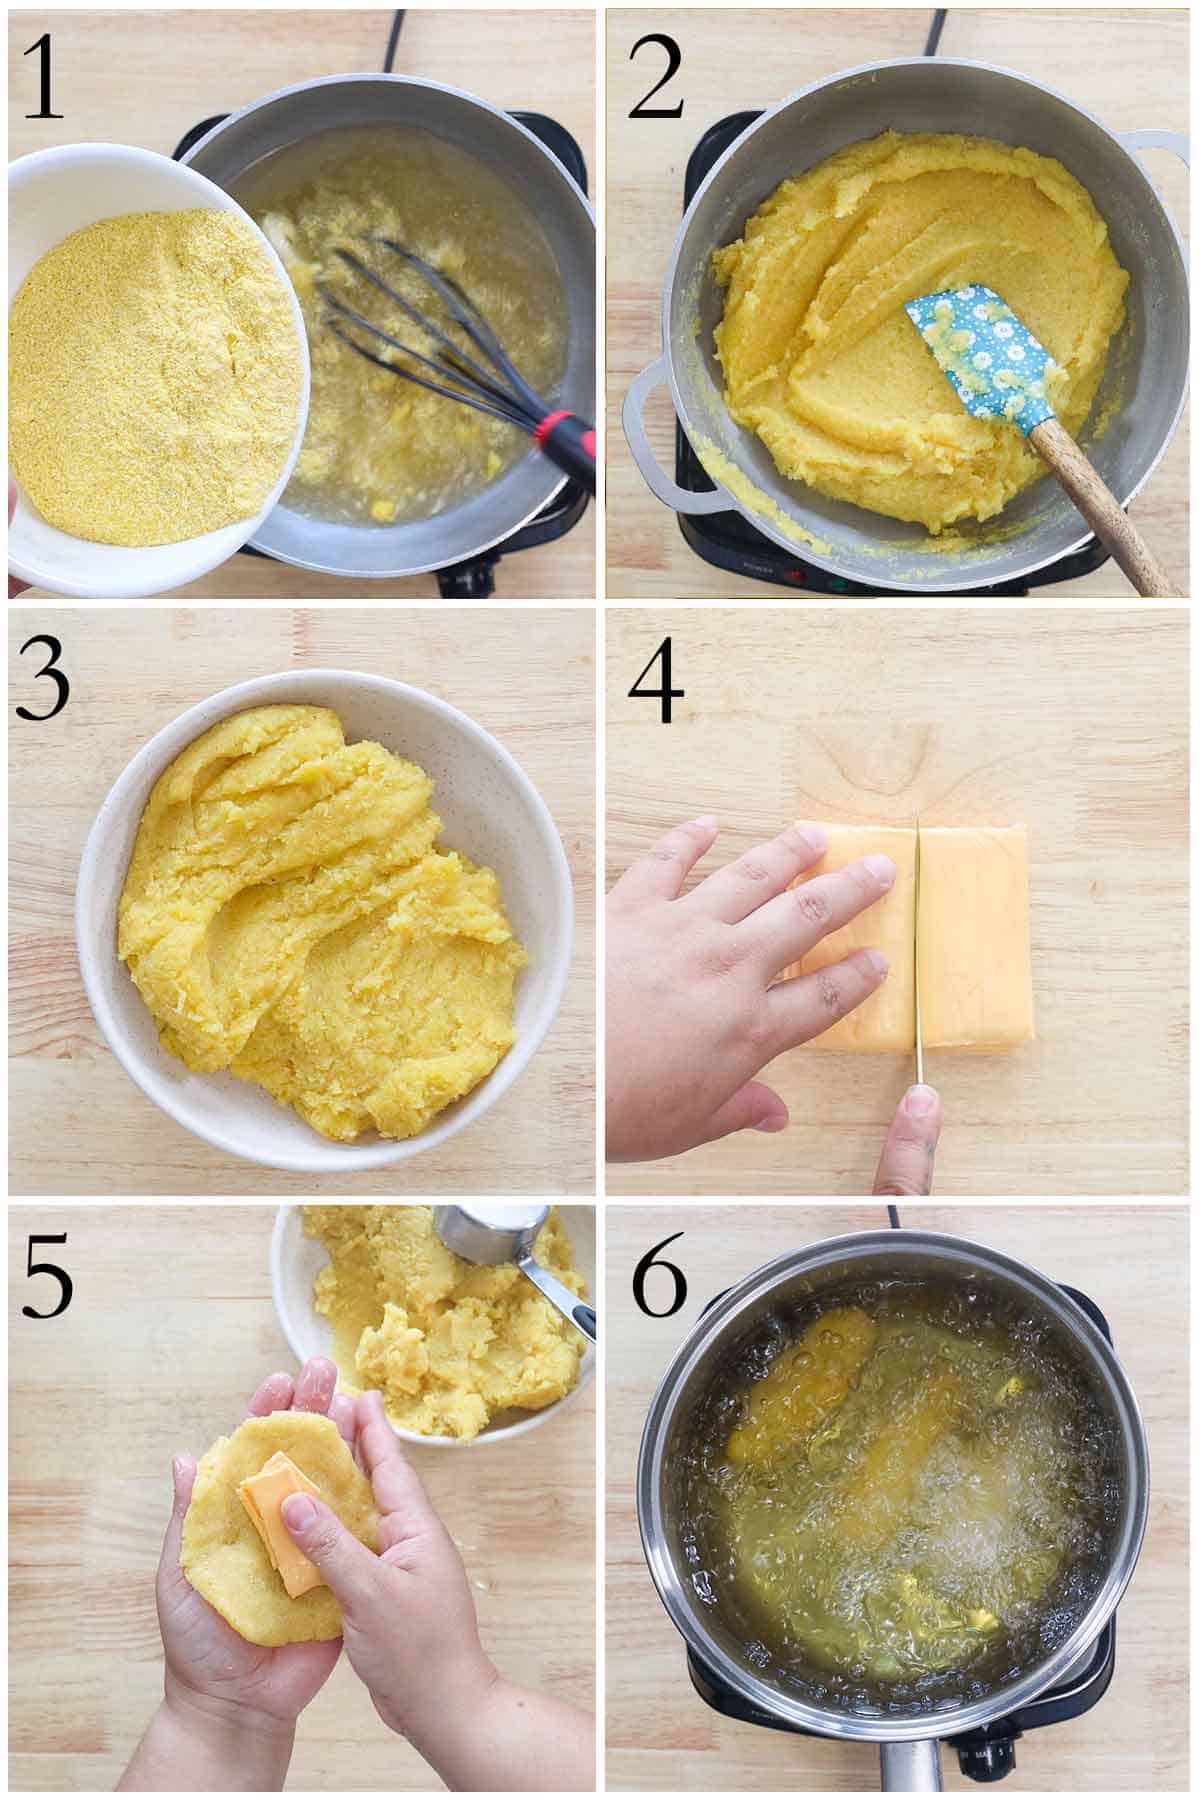 steps 1-6 on how to make sorullos de maiz.